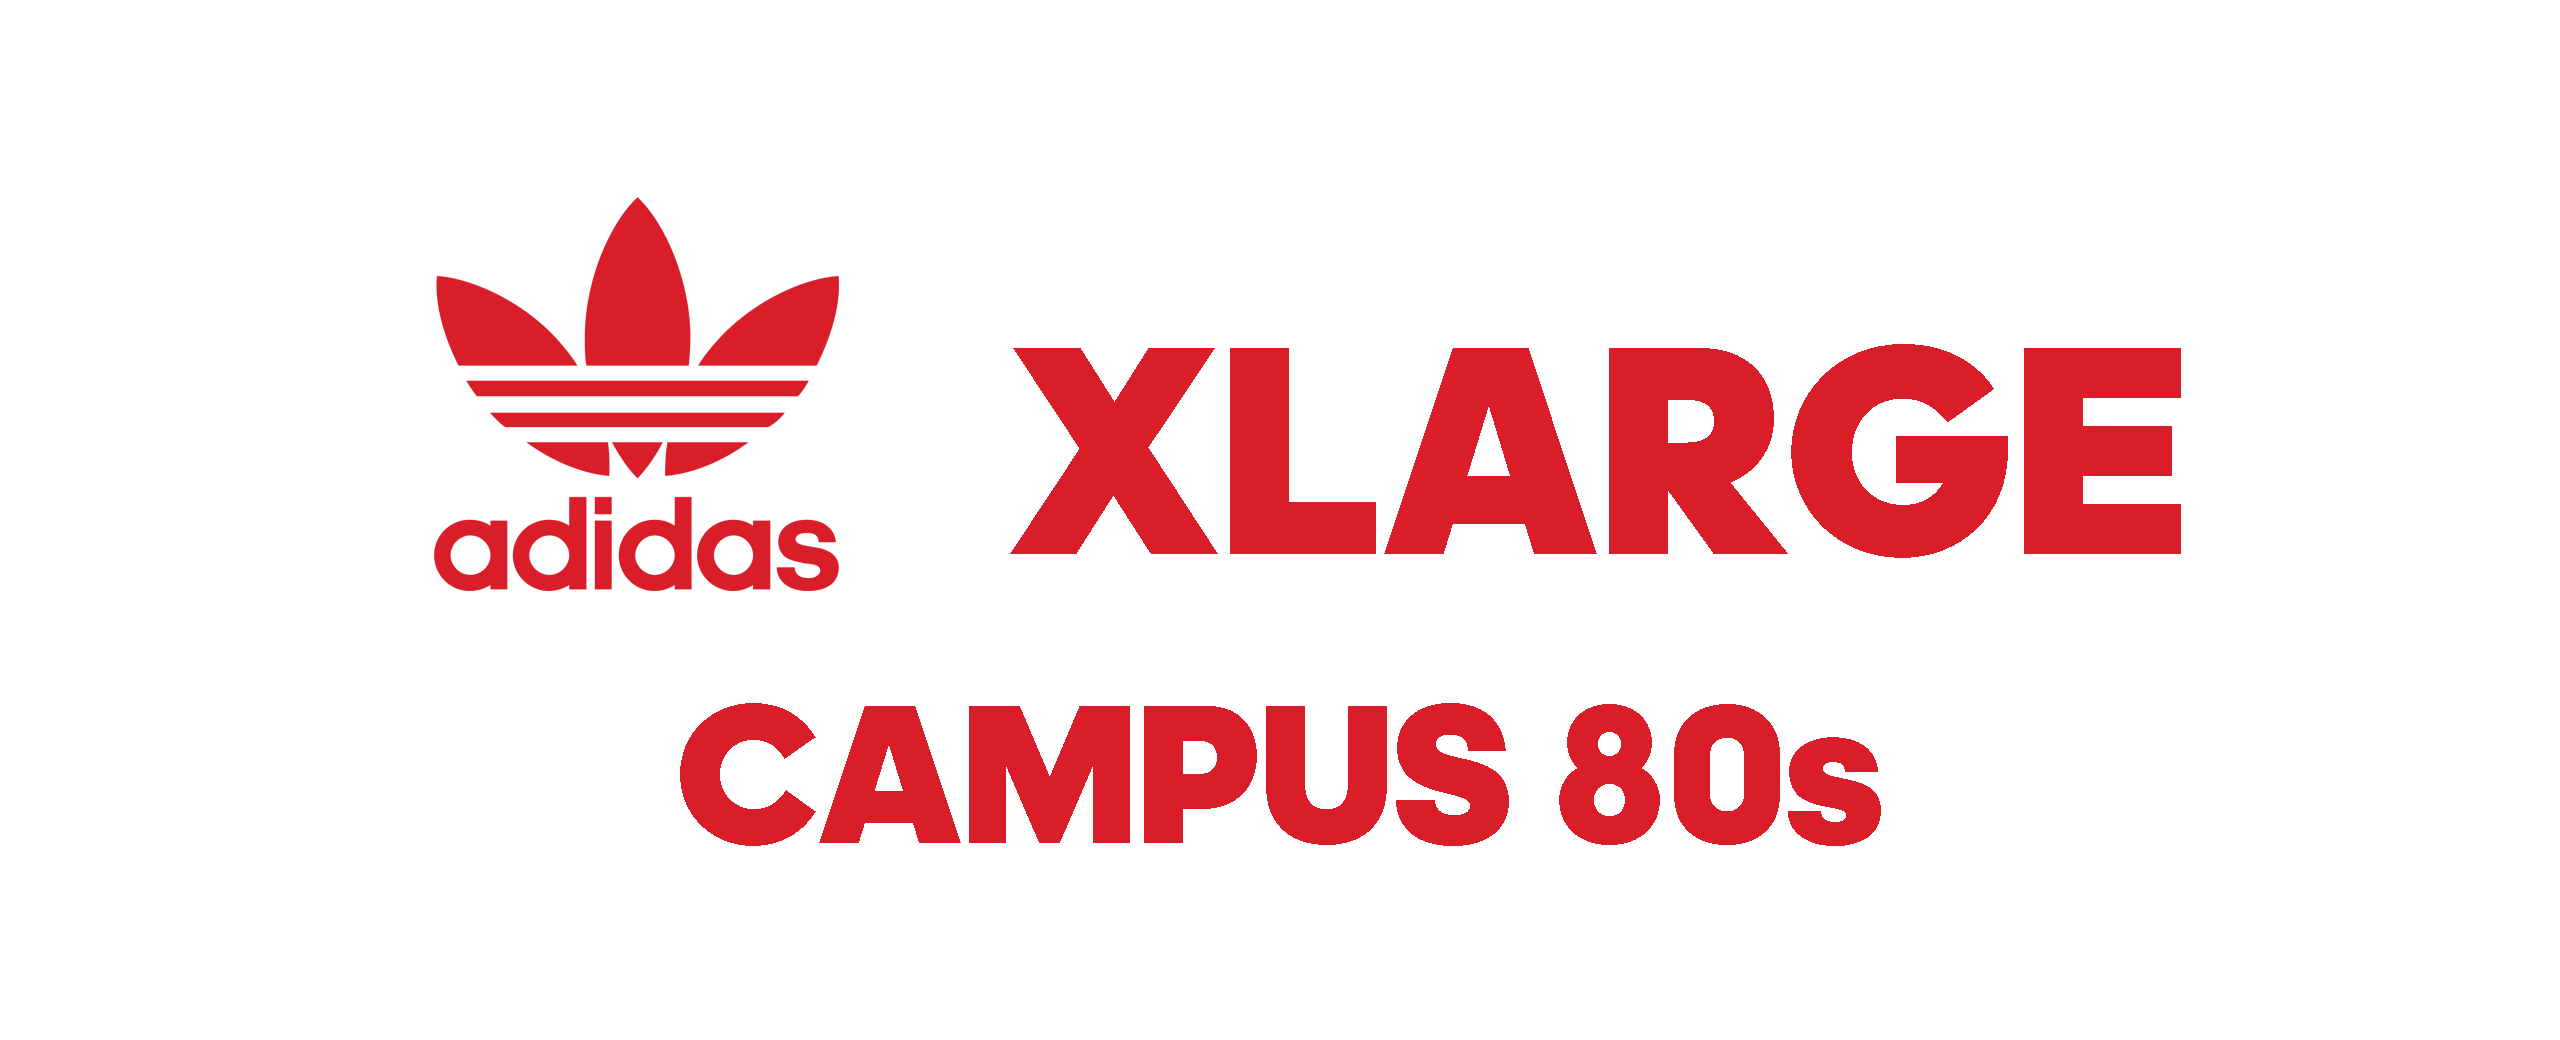 "adidas XLARGE campus"